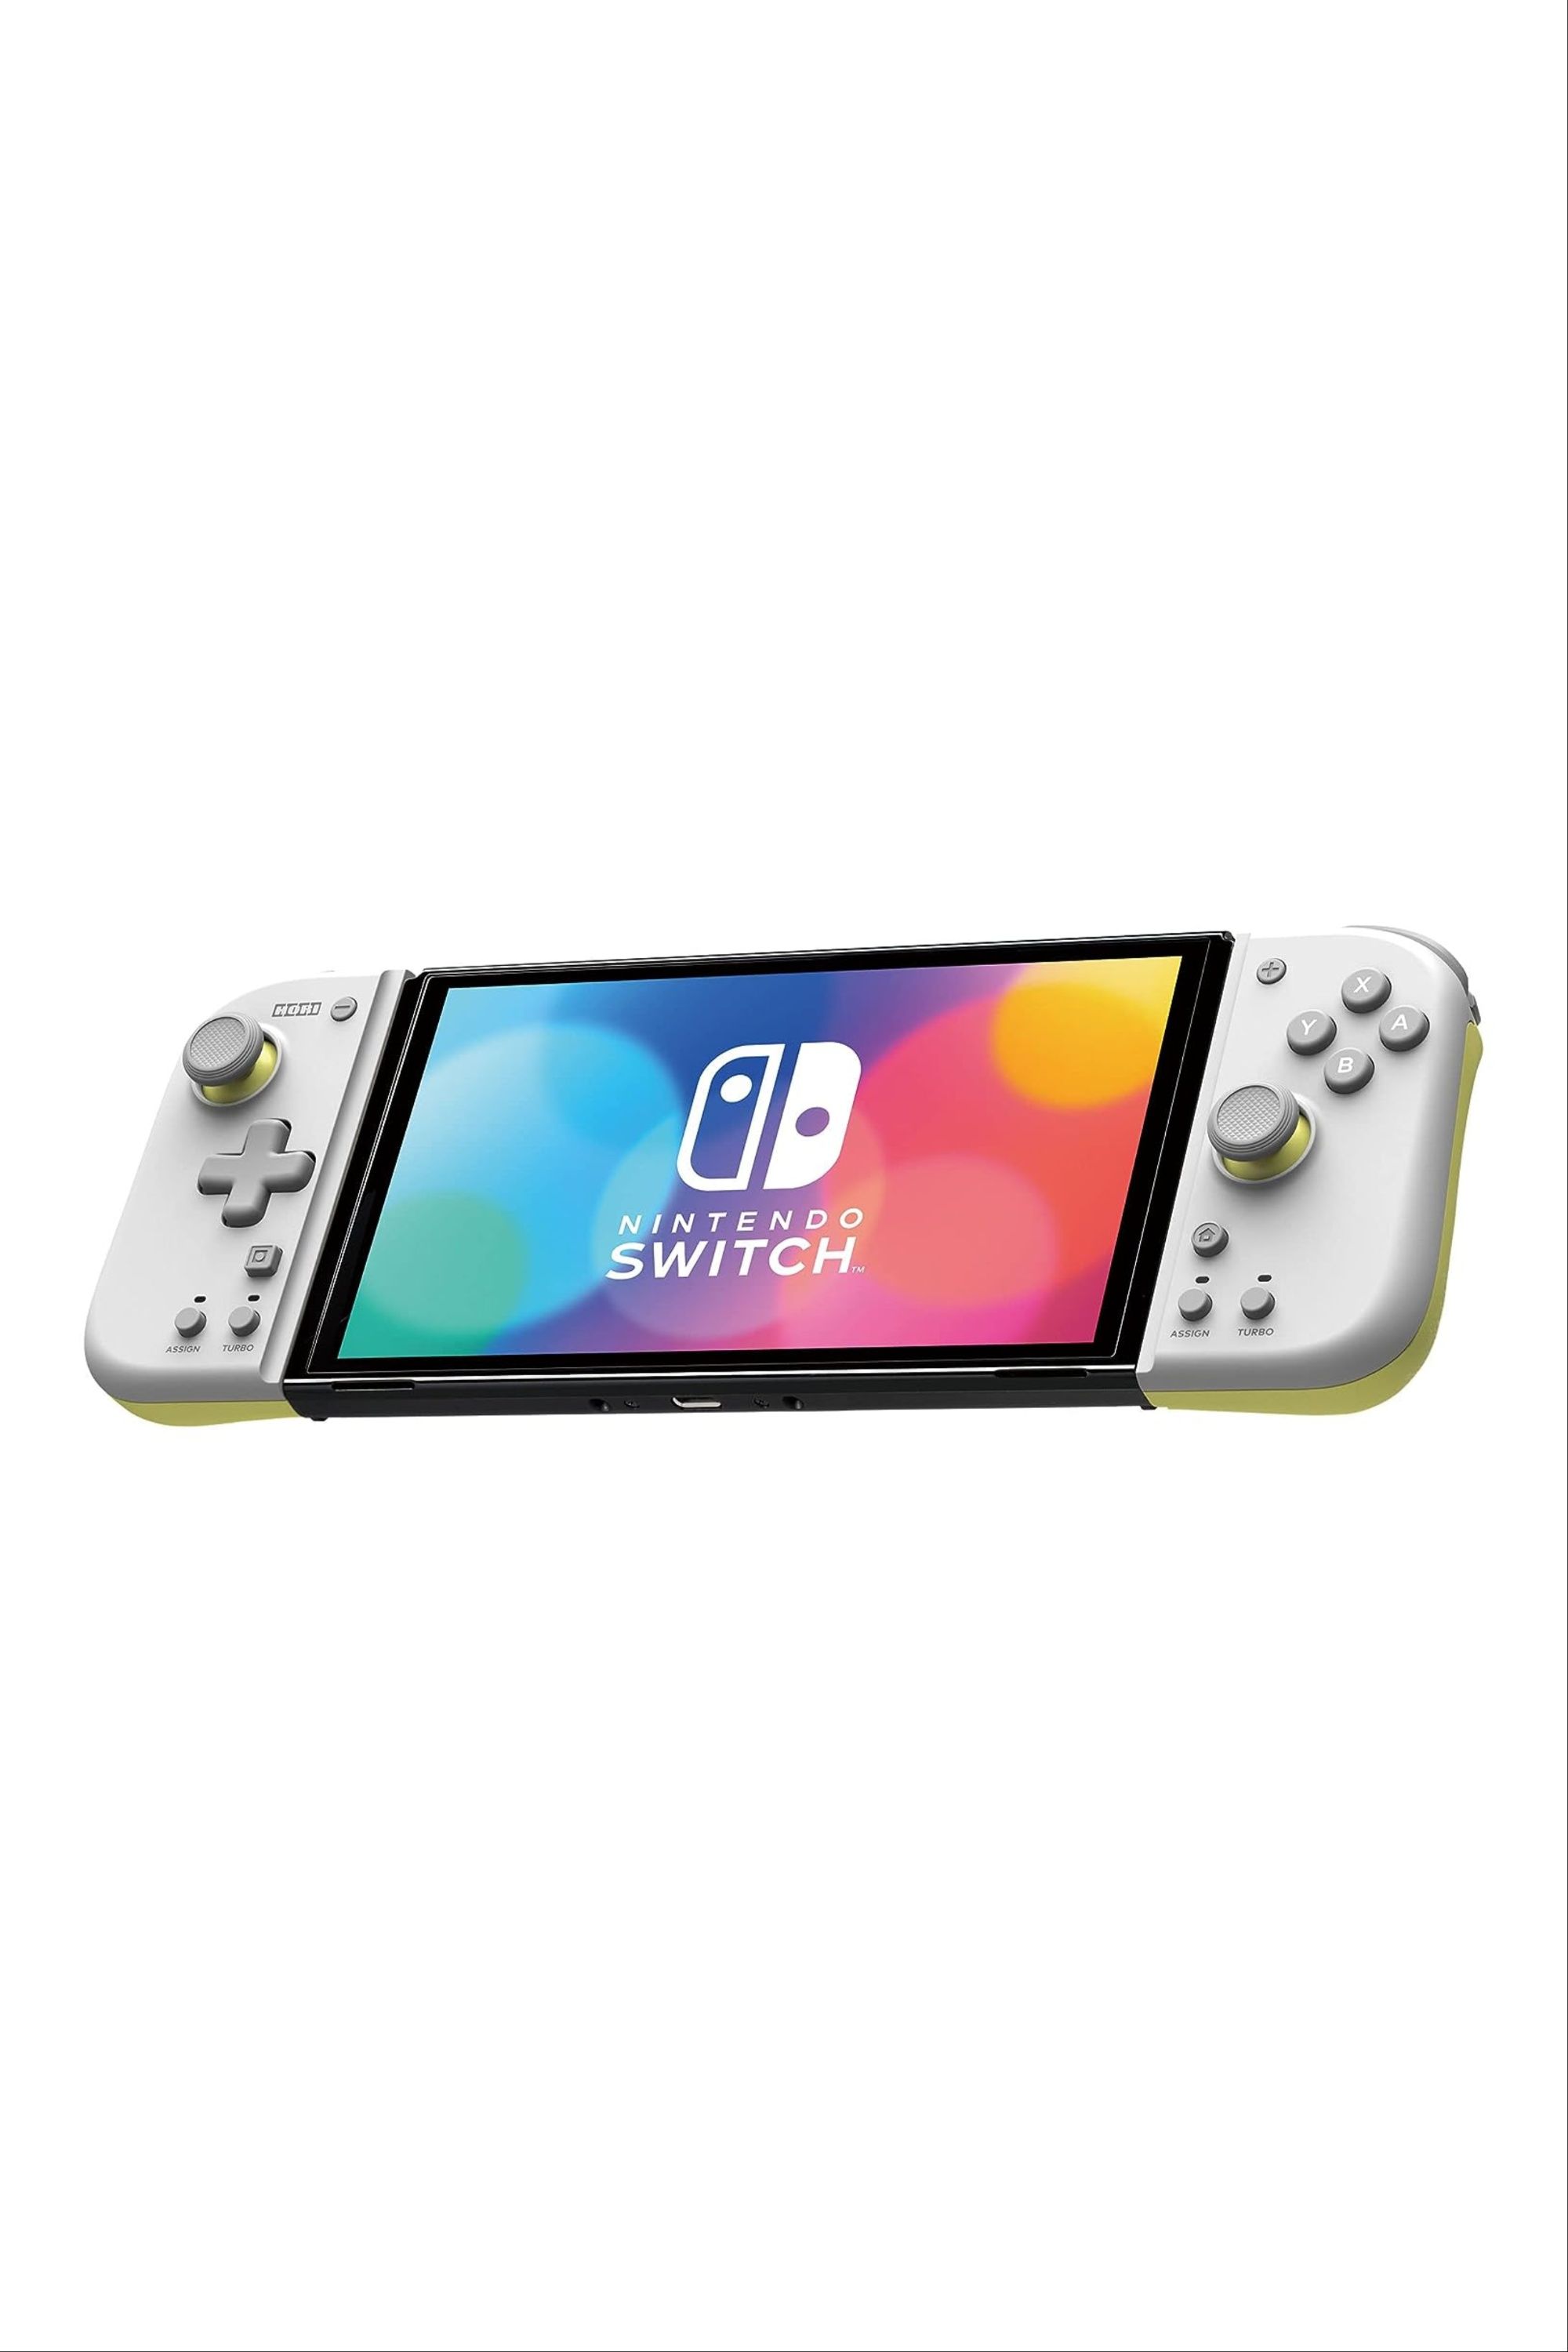 White “Game Boy” Joy-Cons - Nintendo Switch Retro Gaming Controllers M